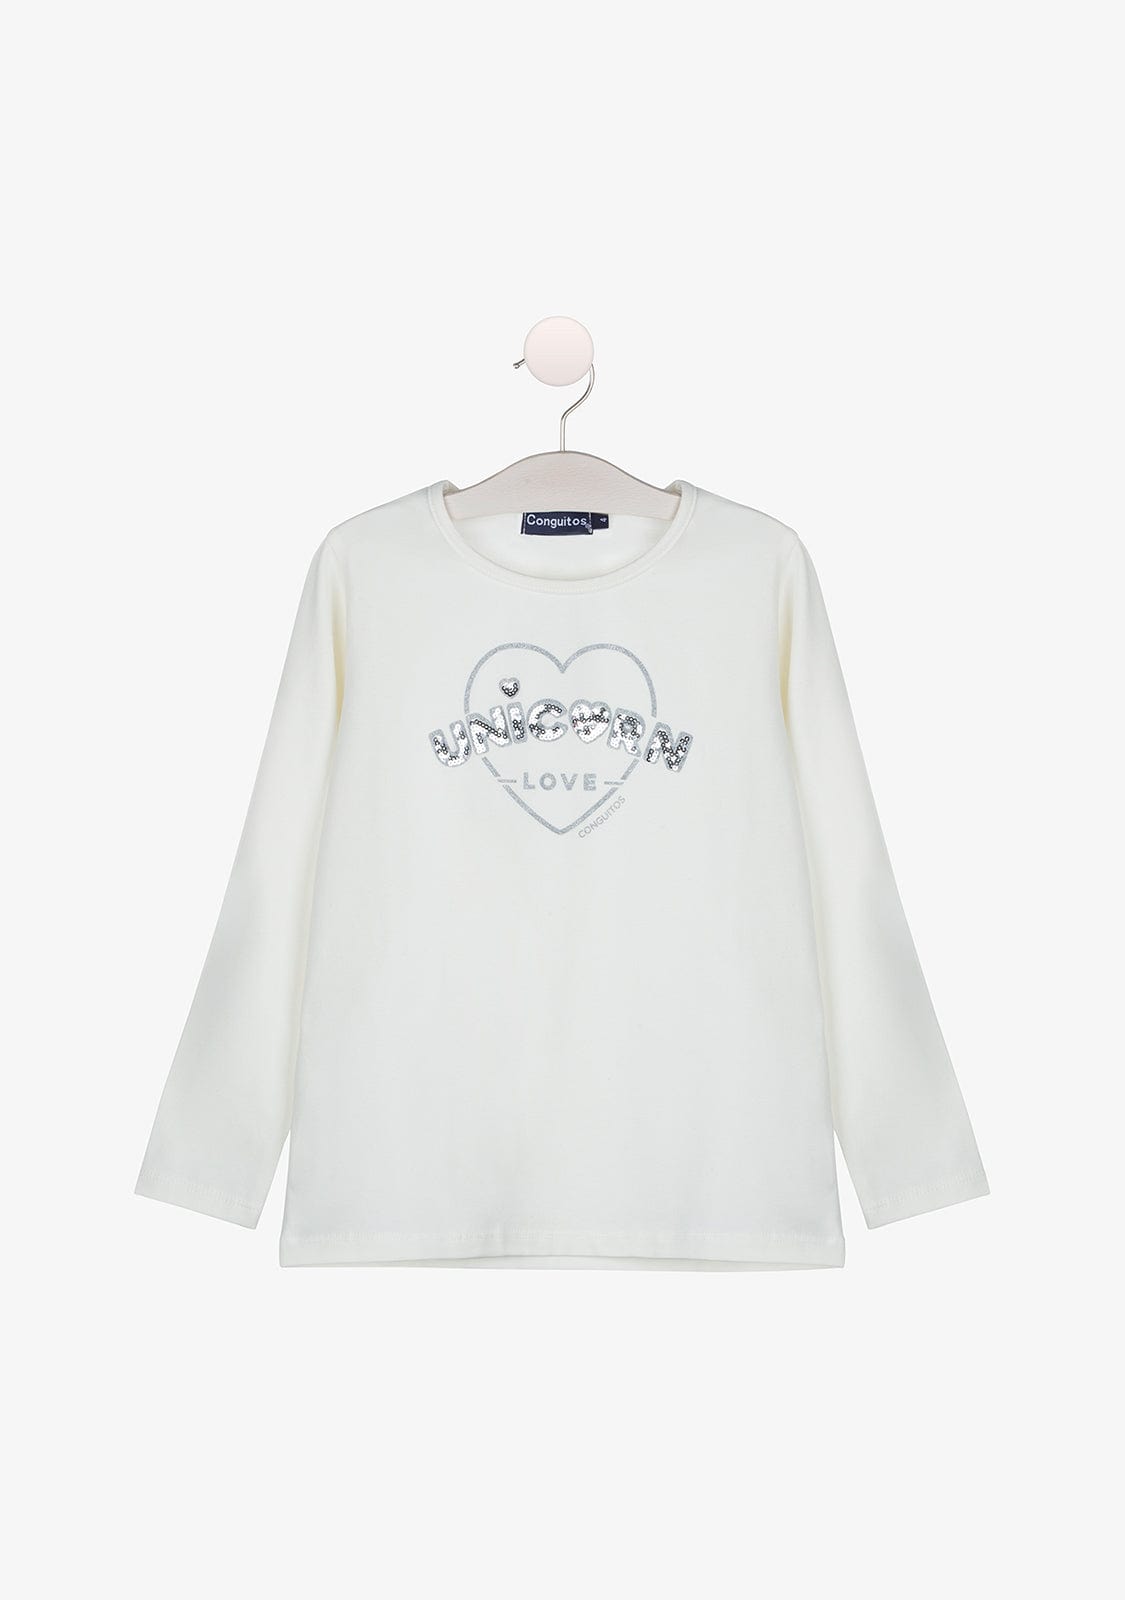 CONGUITOS TEXTIL Clothing Girl's Unicorn Love White Shirt